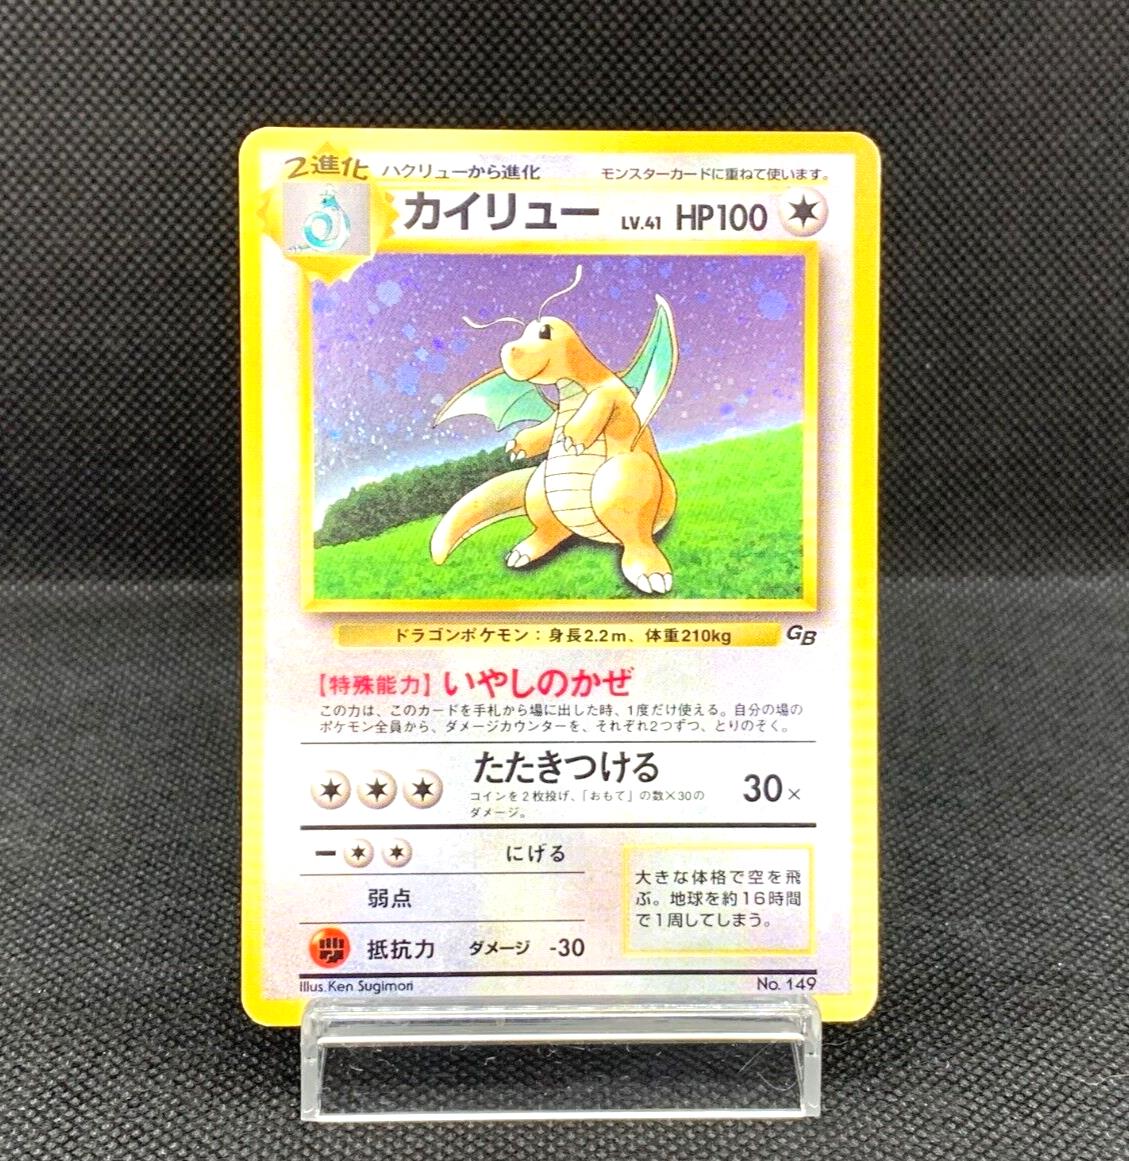 SALE] Lucario V 225/414 Near Mint Japanese Pokemon Card